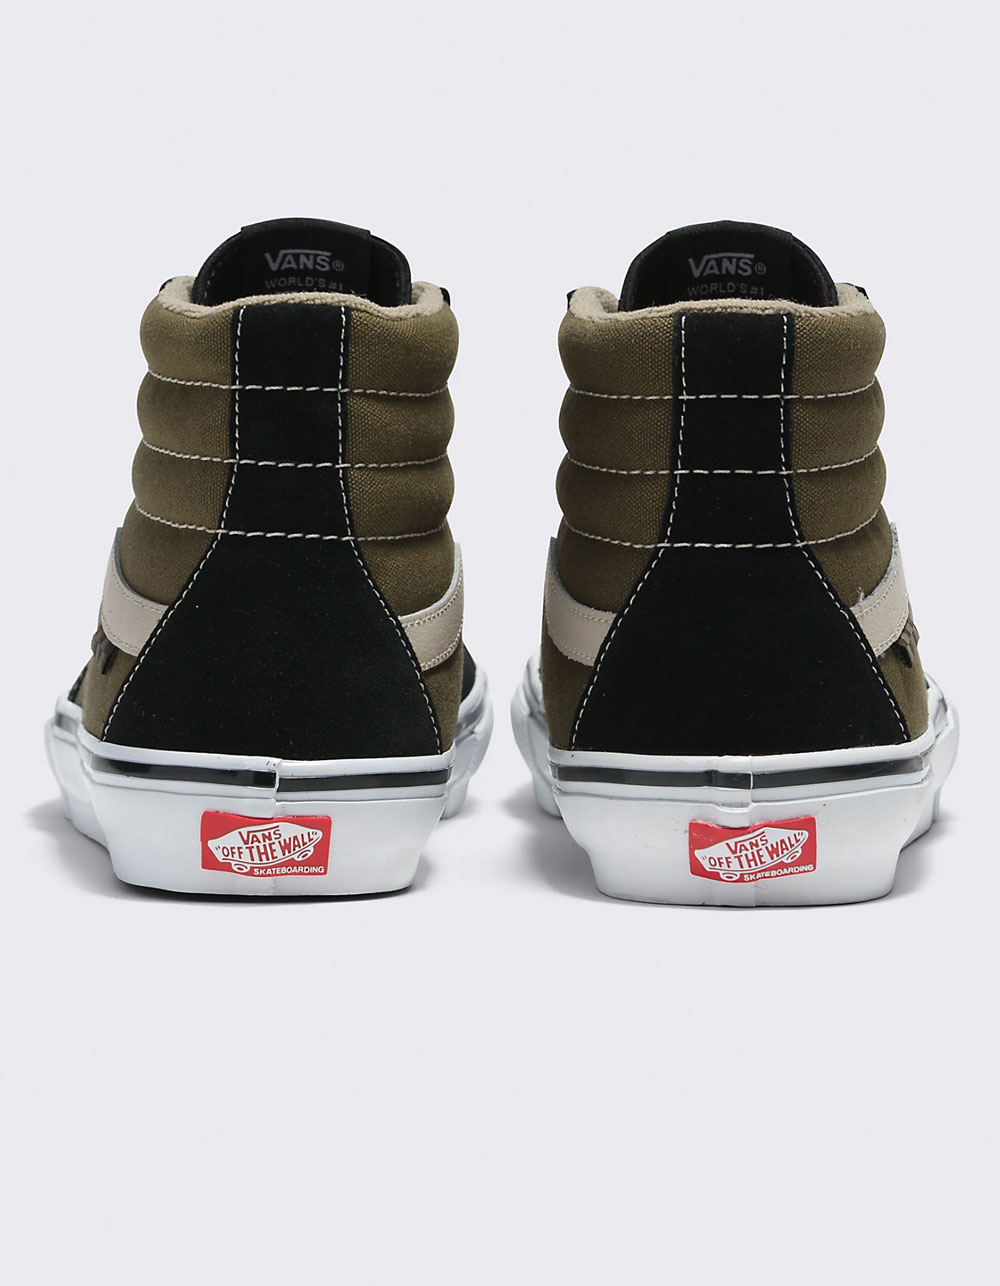 Vans Skate Sk8-Hi Shoes - Buy Vans shoes online